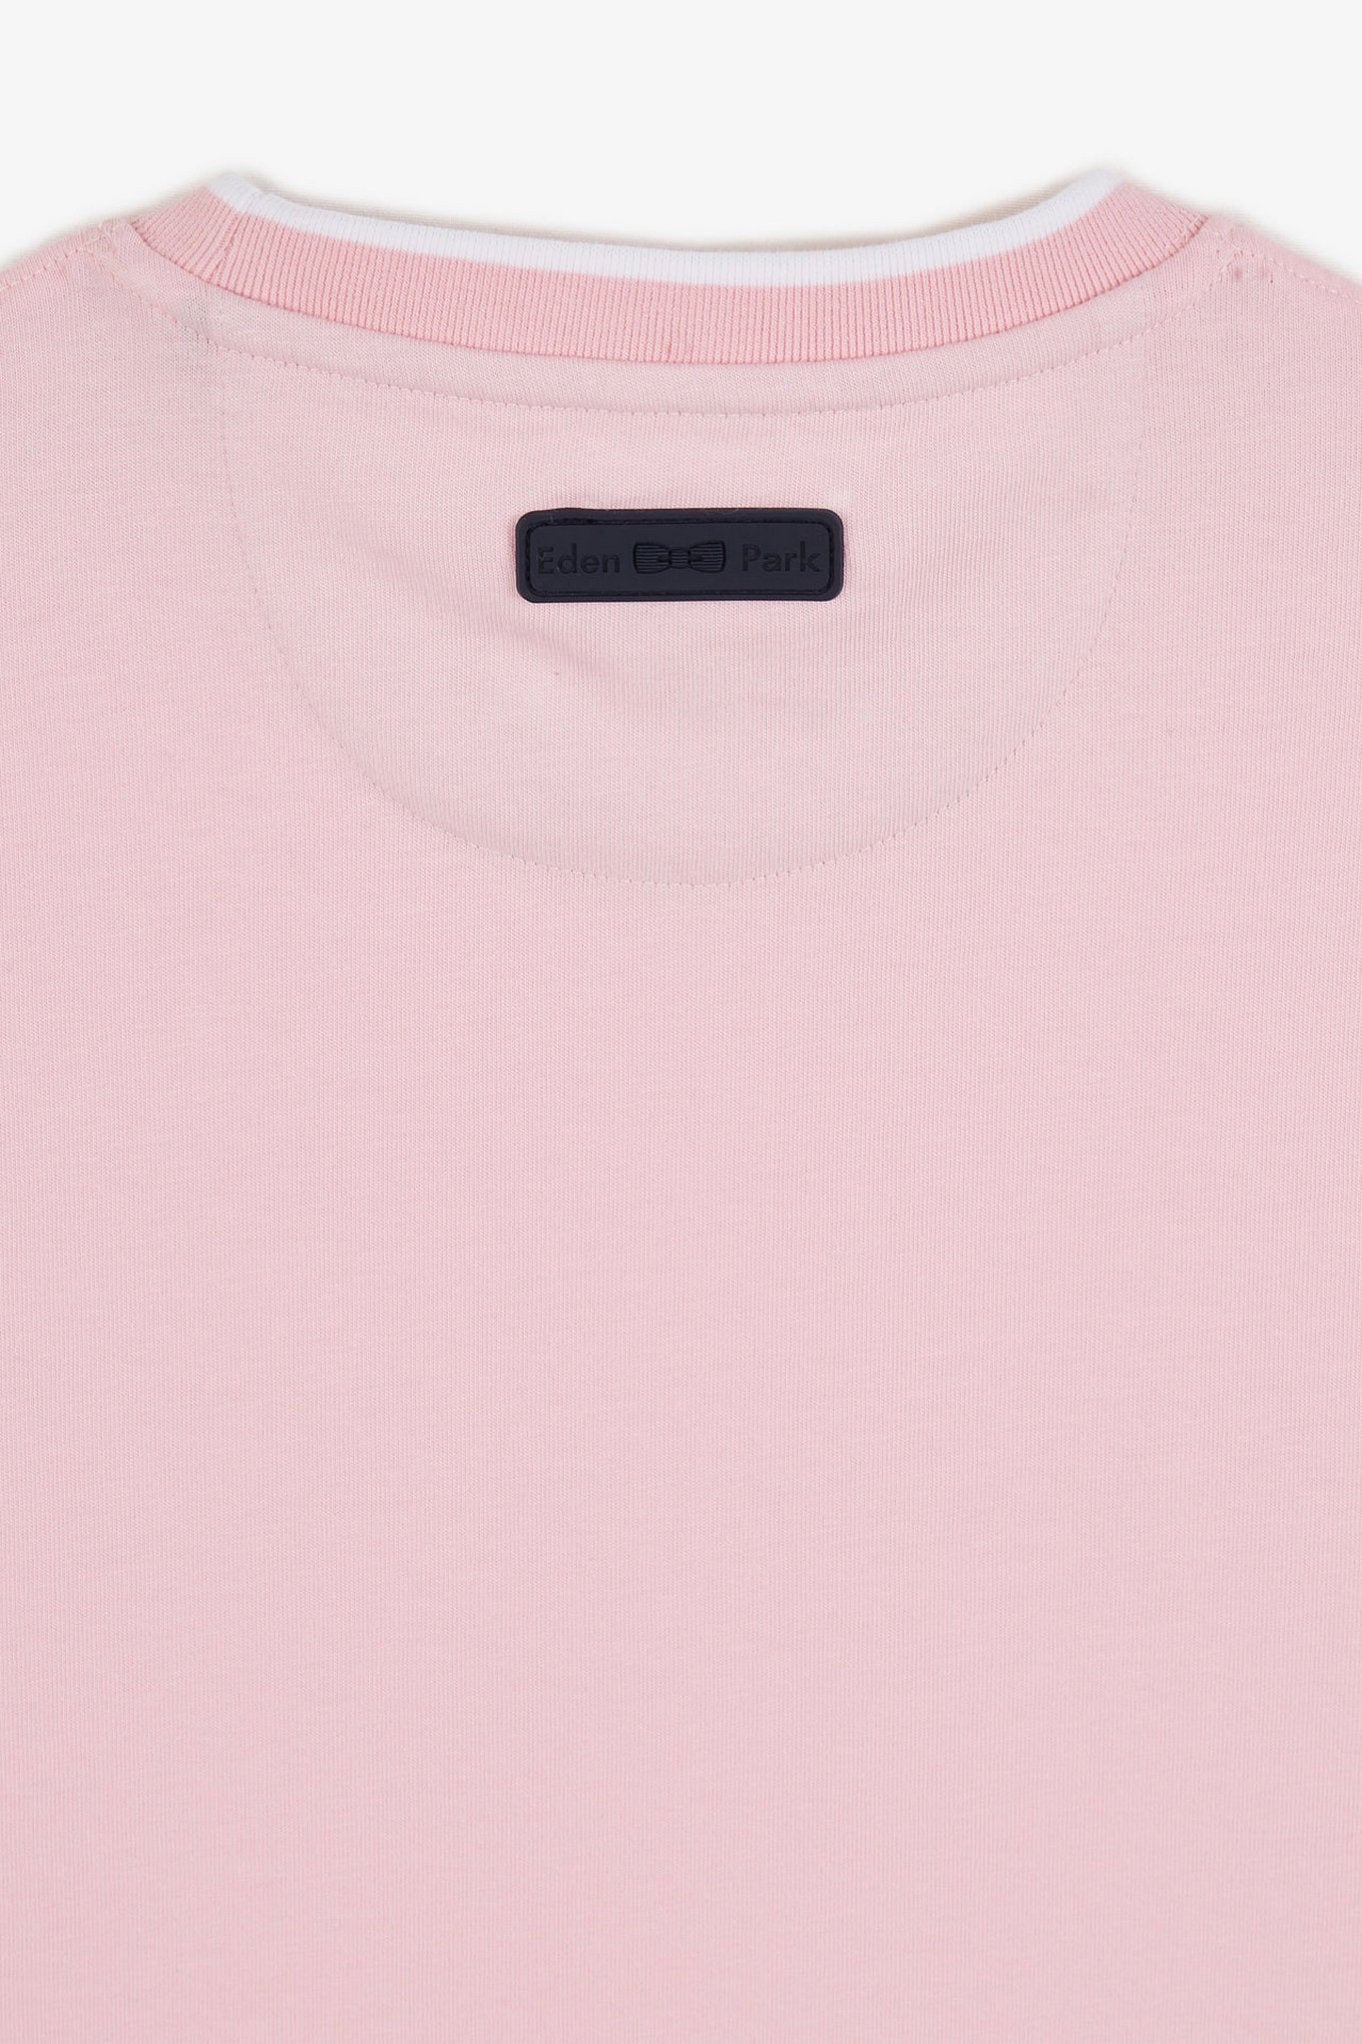 Plain Pink Short-Sleeved T-Shirt_E24MAITC0018_ROC16_08